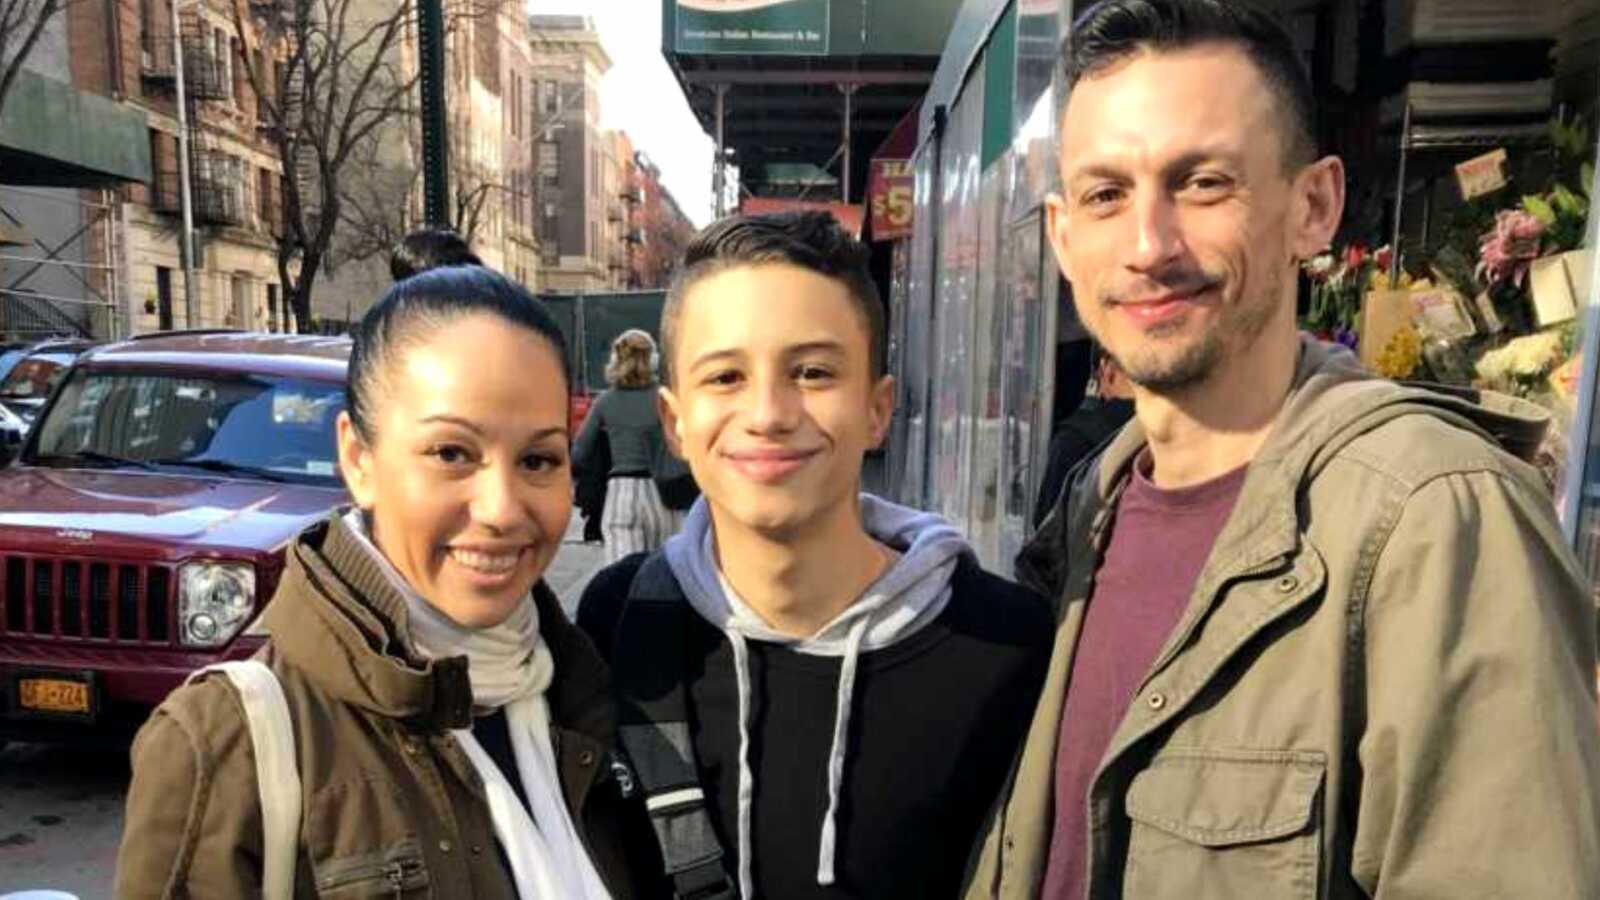 Son smiling next to adoptive parents on NYC street